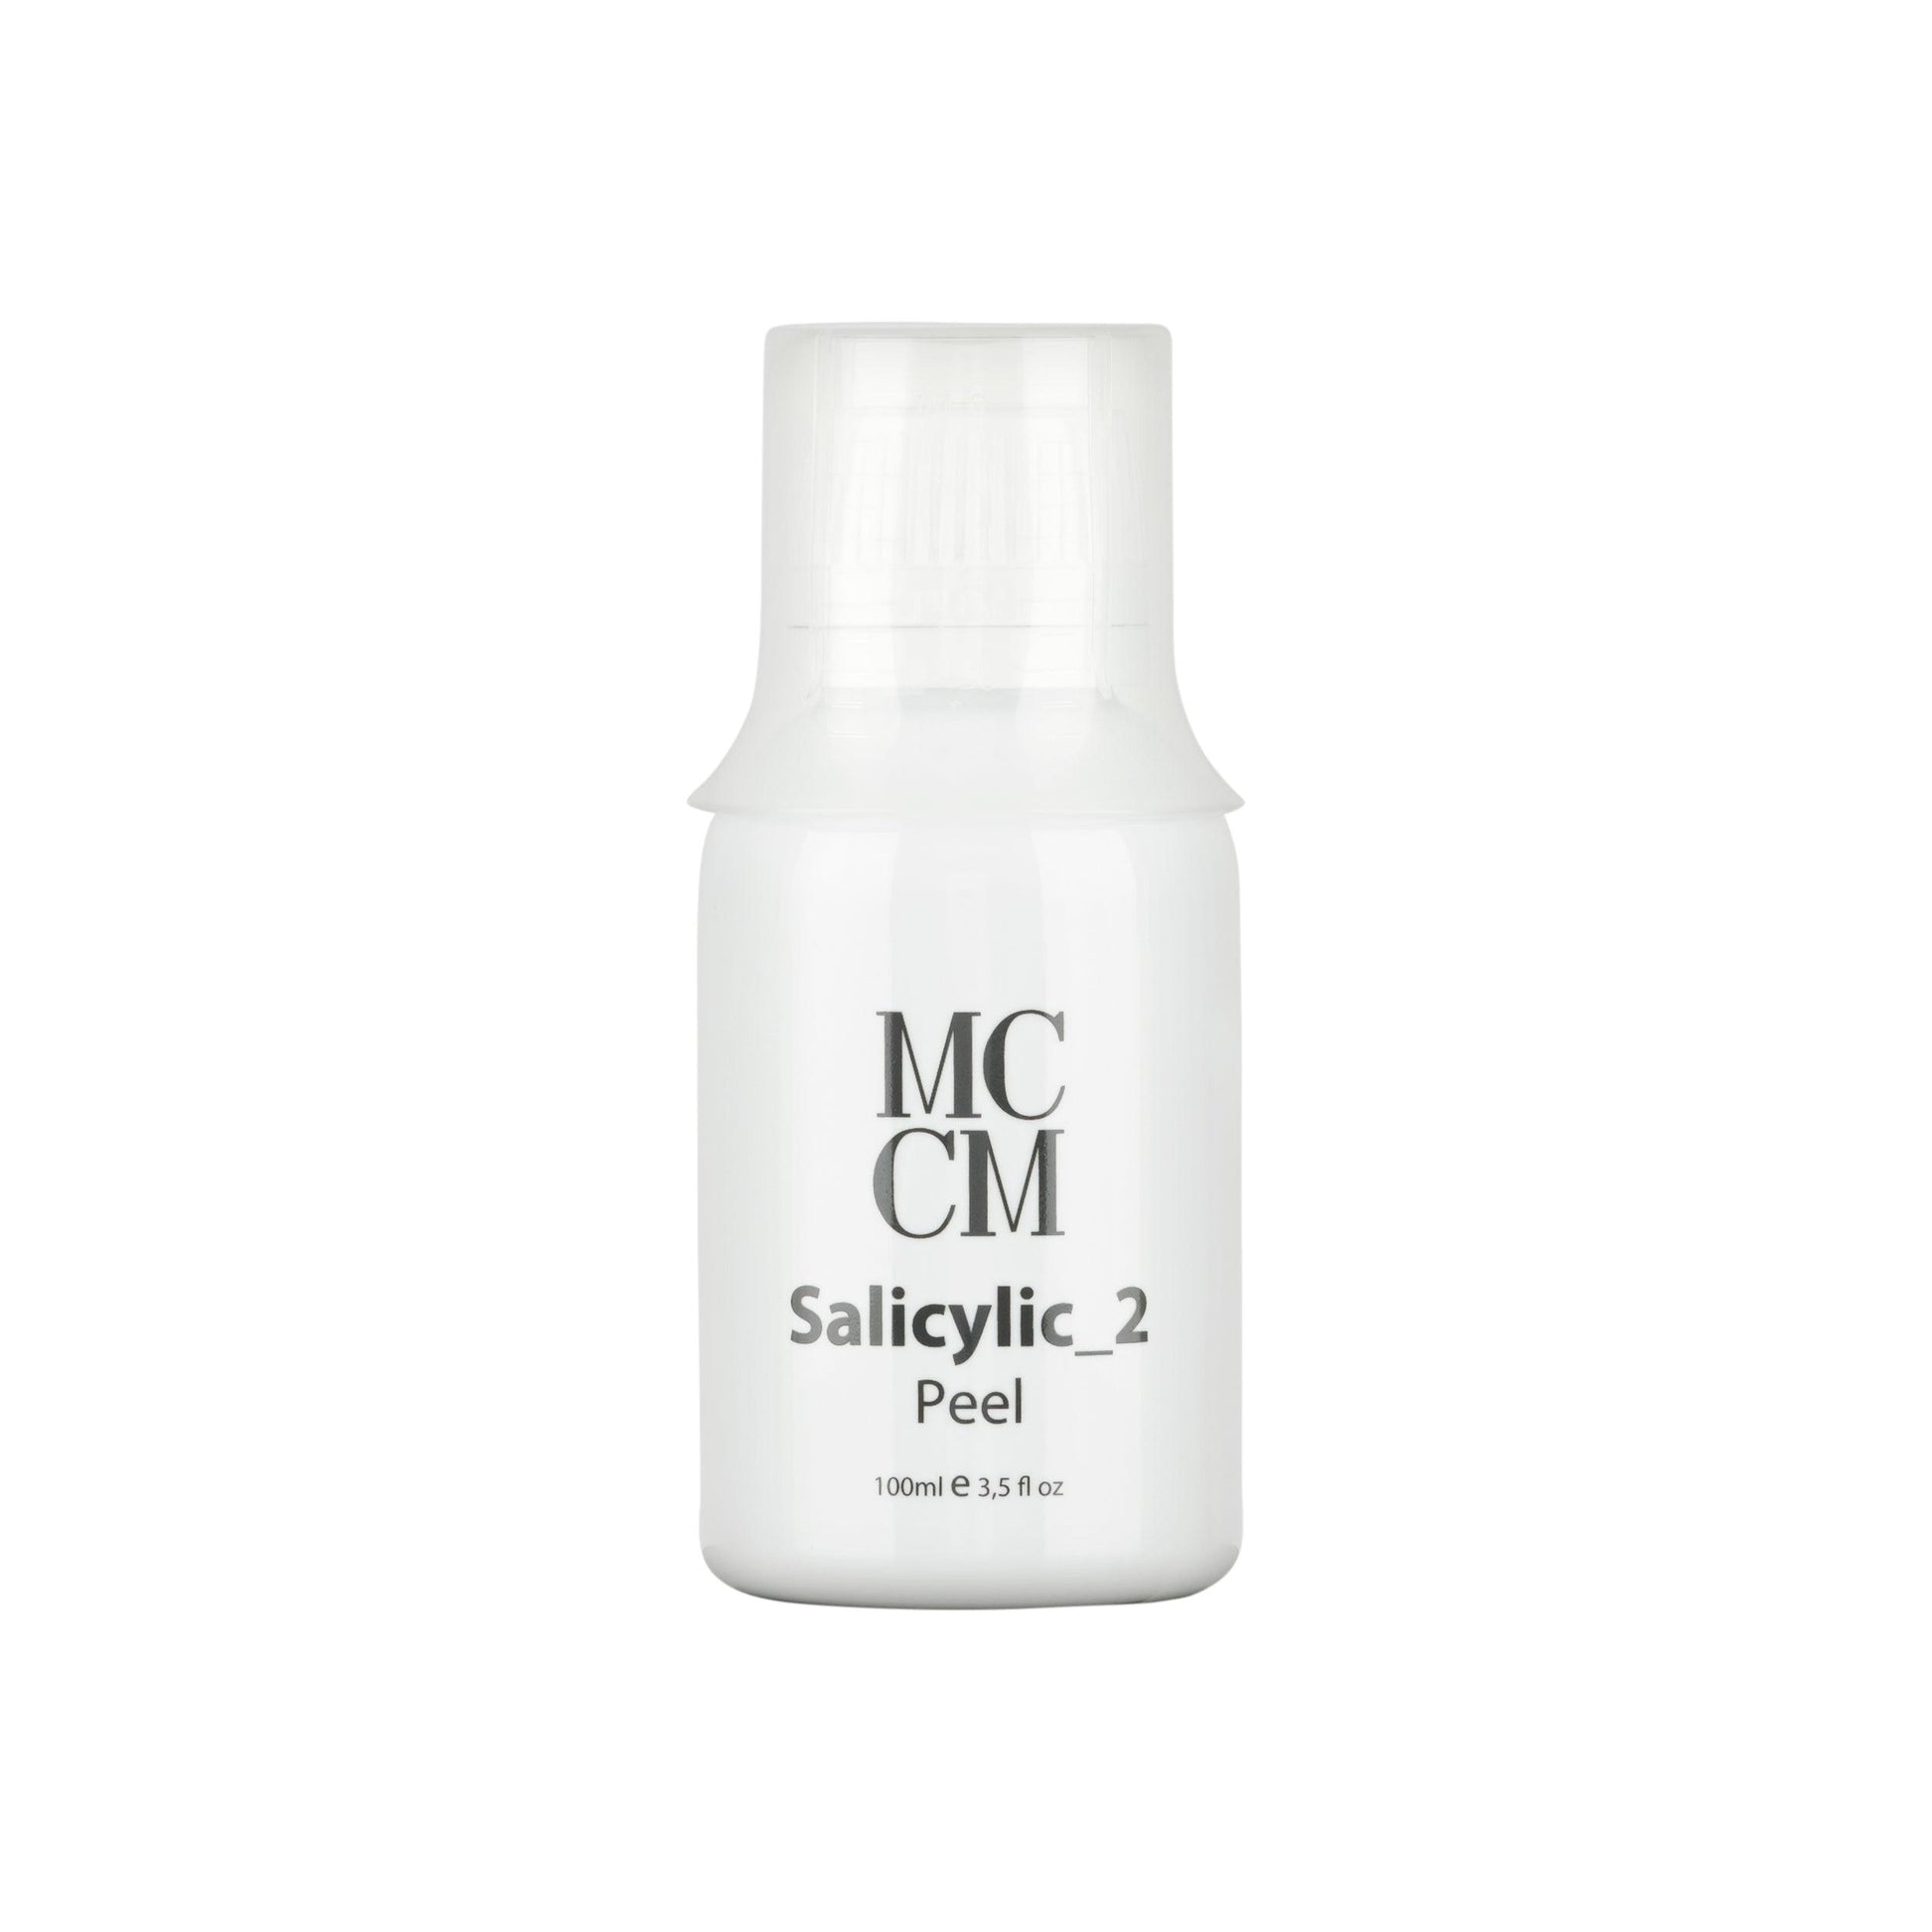 Salicylic_2 Peel - MCCM Medical Cosmetics